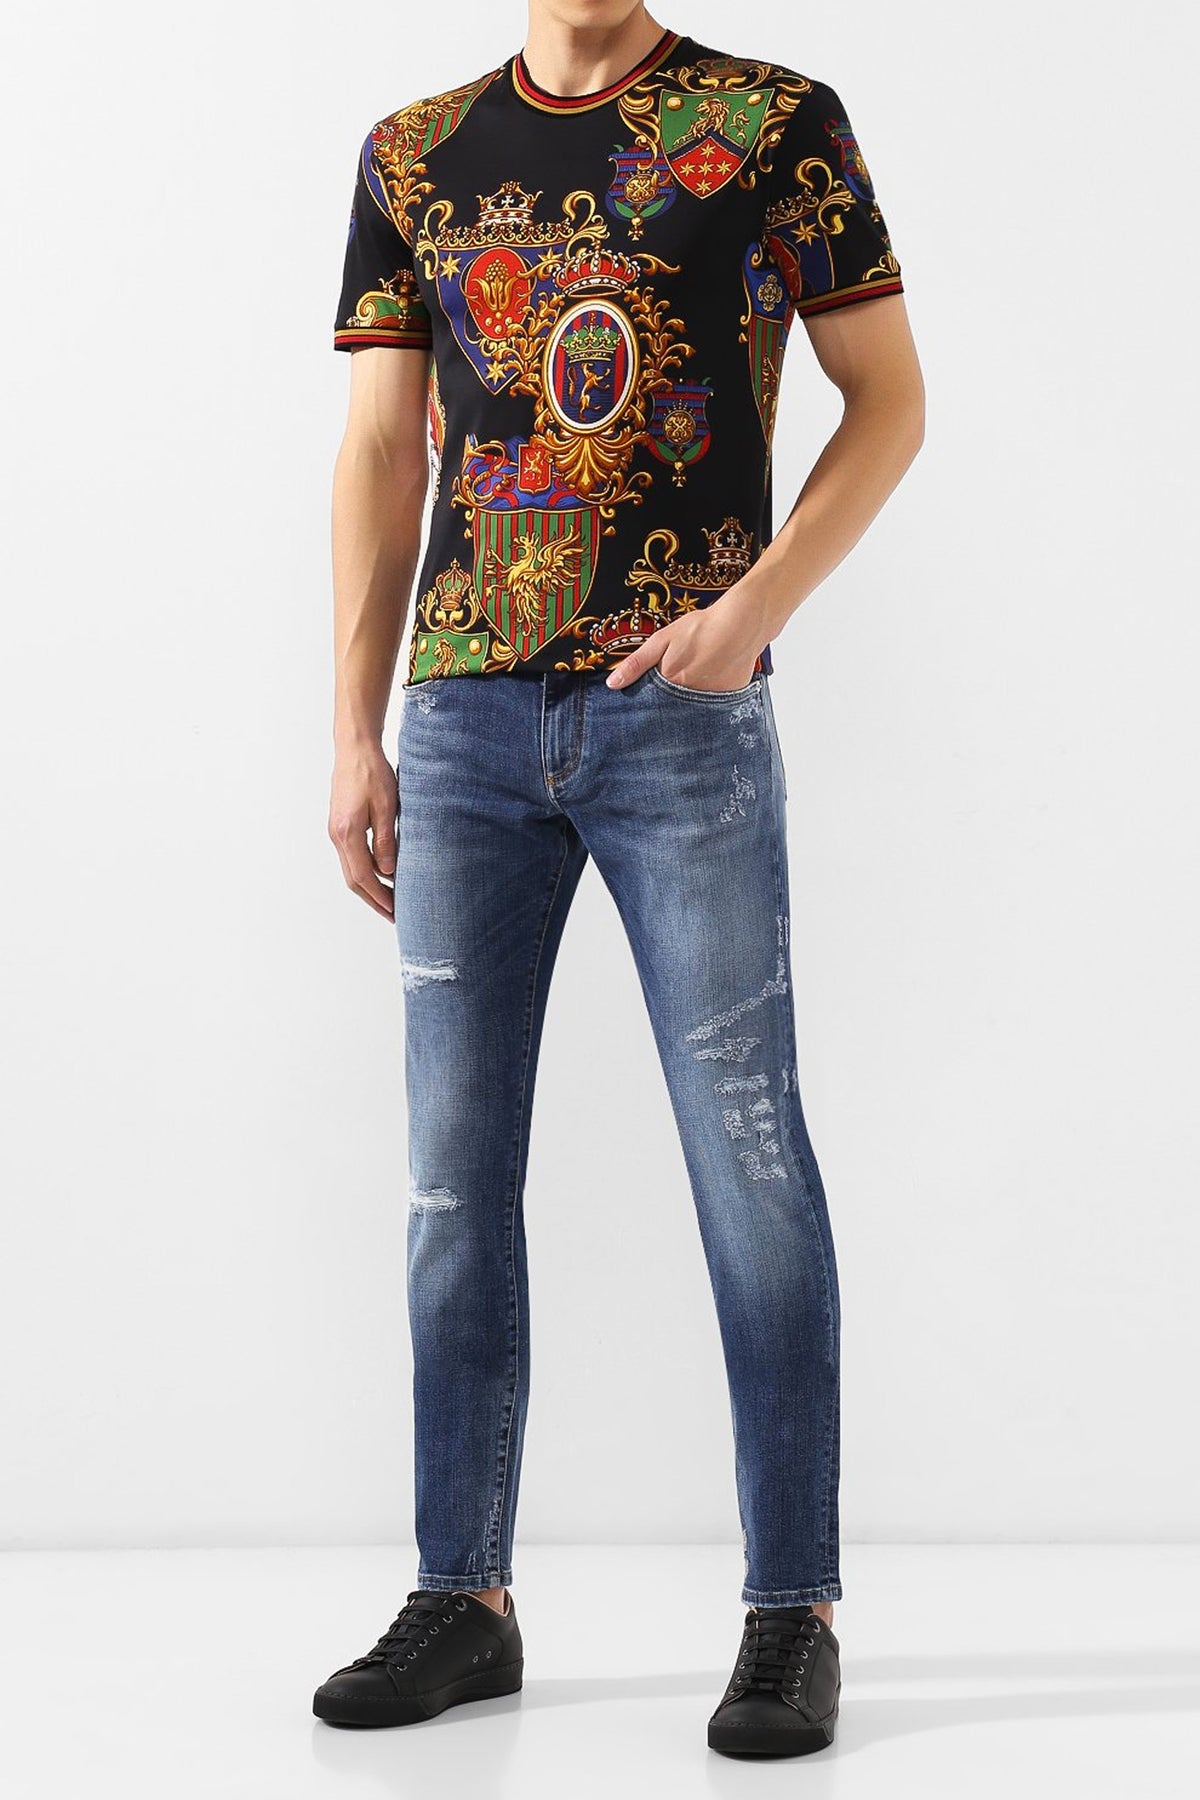 Dolce & Gabbana Cotton T-Shirt All Over Print Pattern